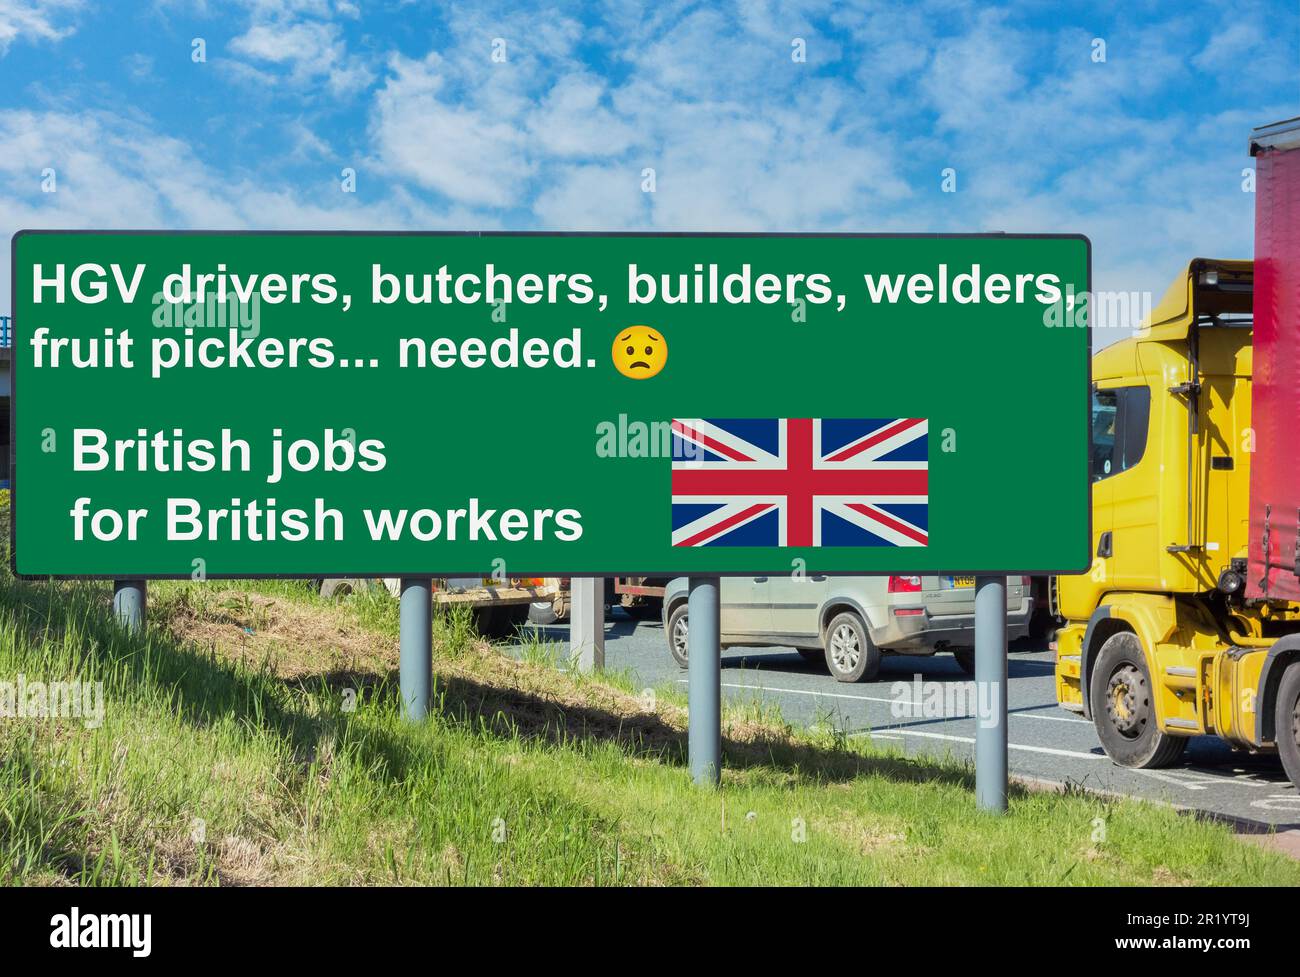 Brexit, EU, Europe, immigration, workers, British jobs, job vacancies...concept Stock Photo